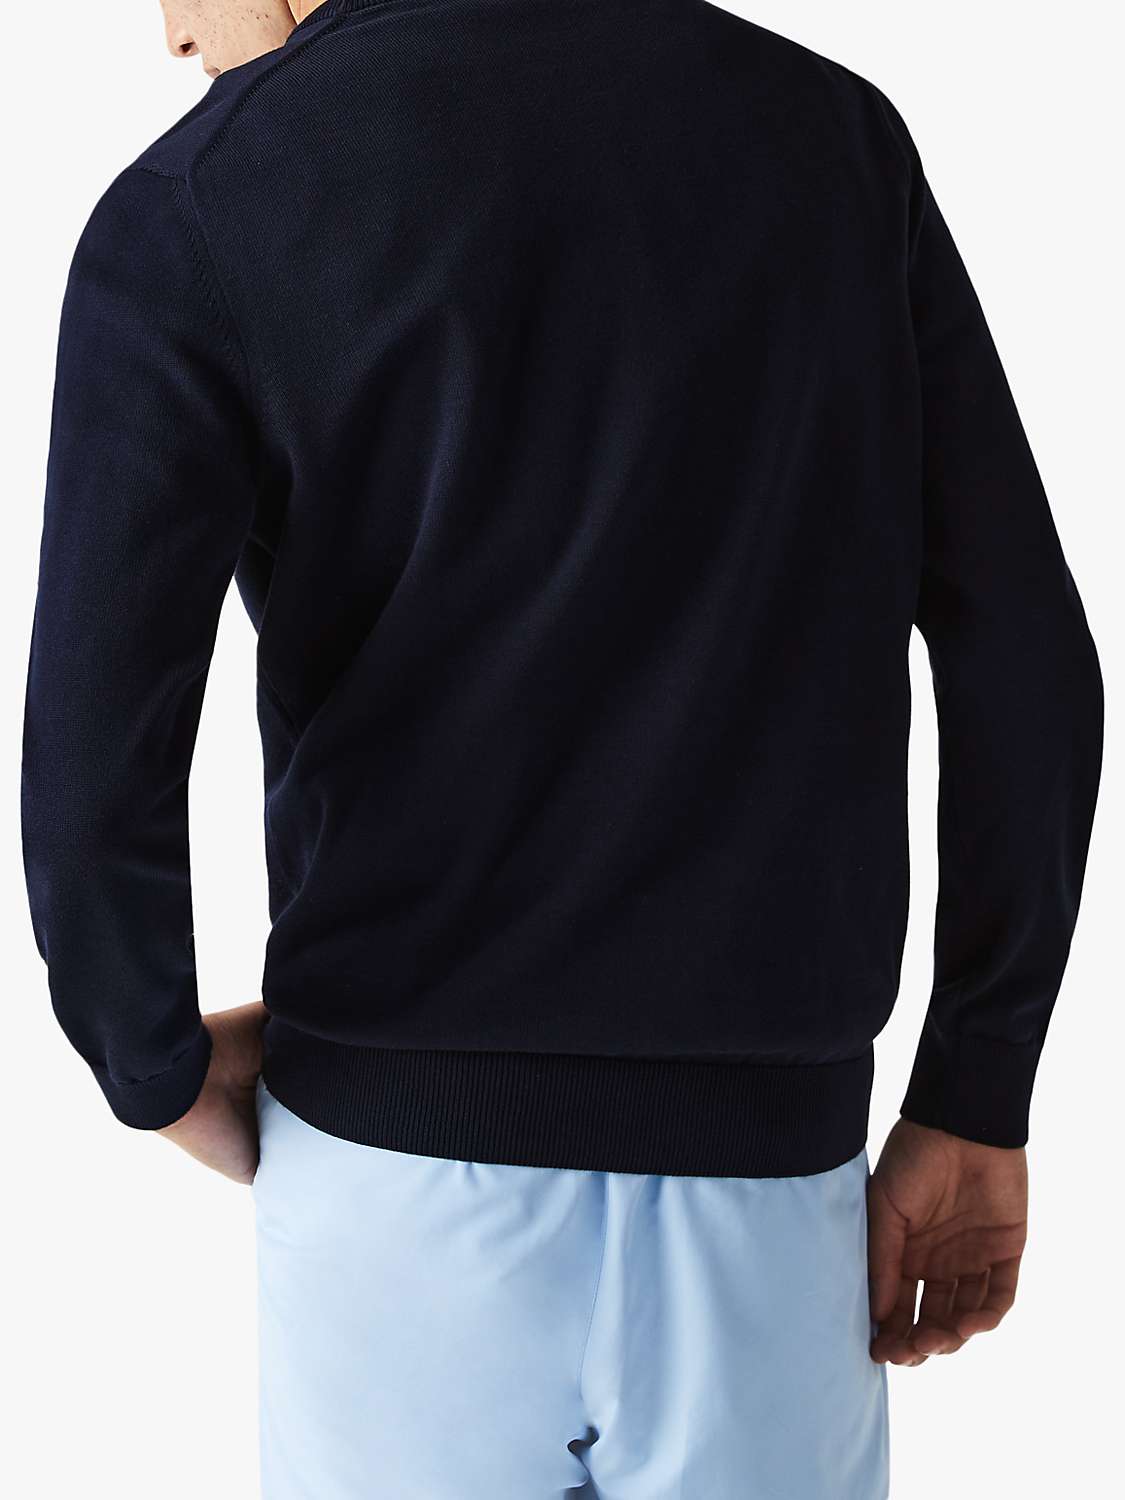 Buy Lacoste Classic Cotton Sweatshirt Online at johnlewis.com